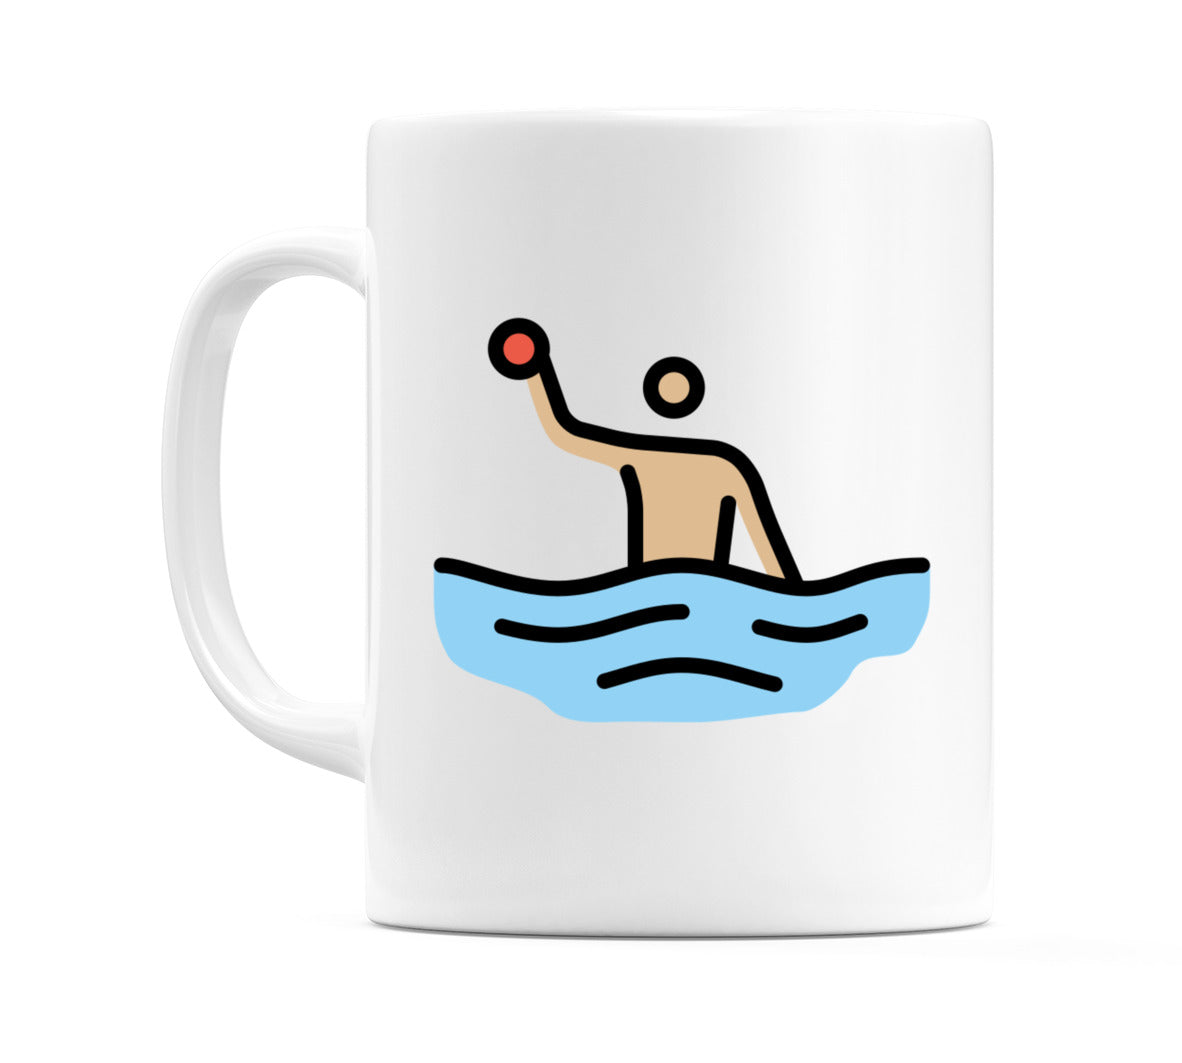 Person Playing Water Polo: Medium-Light Skin Tone Emoji Mug